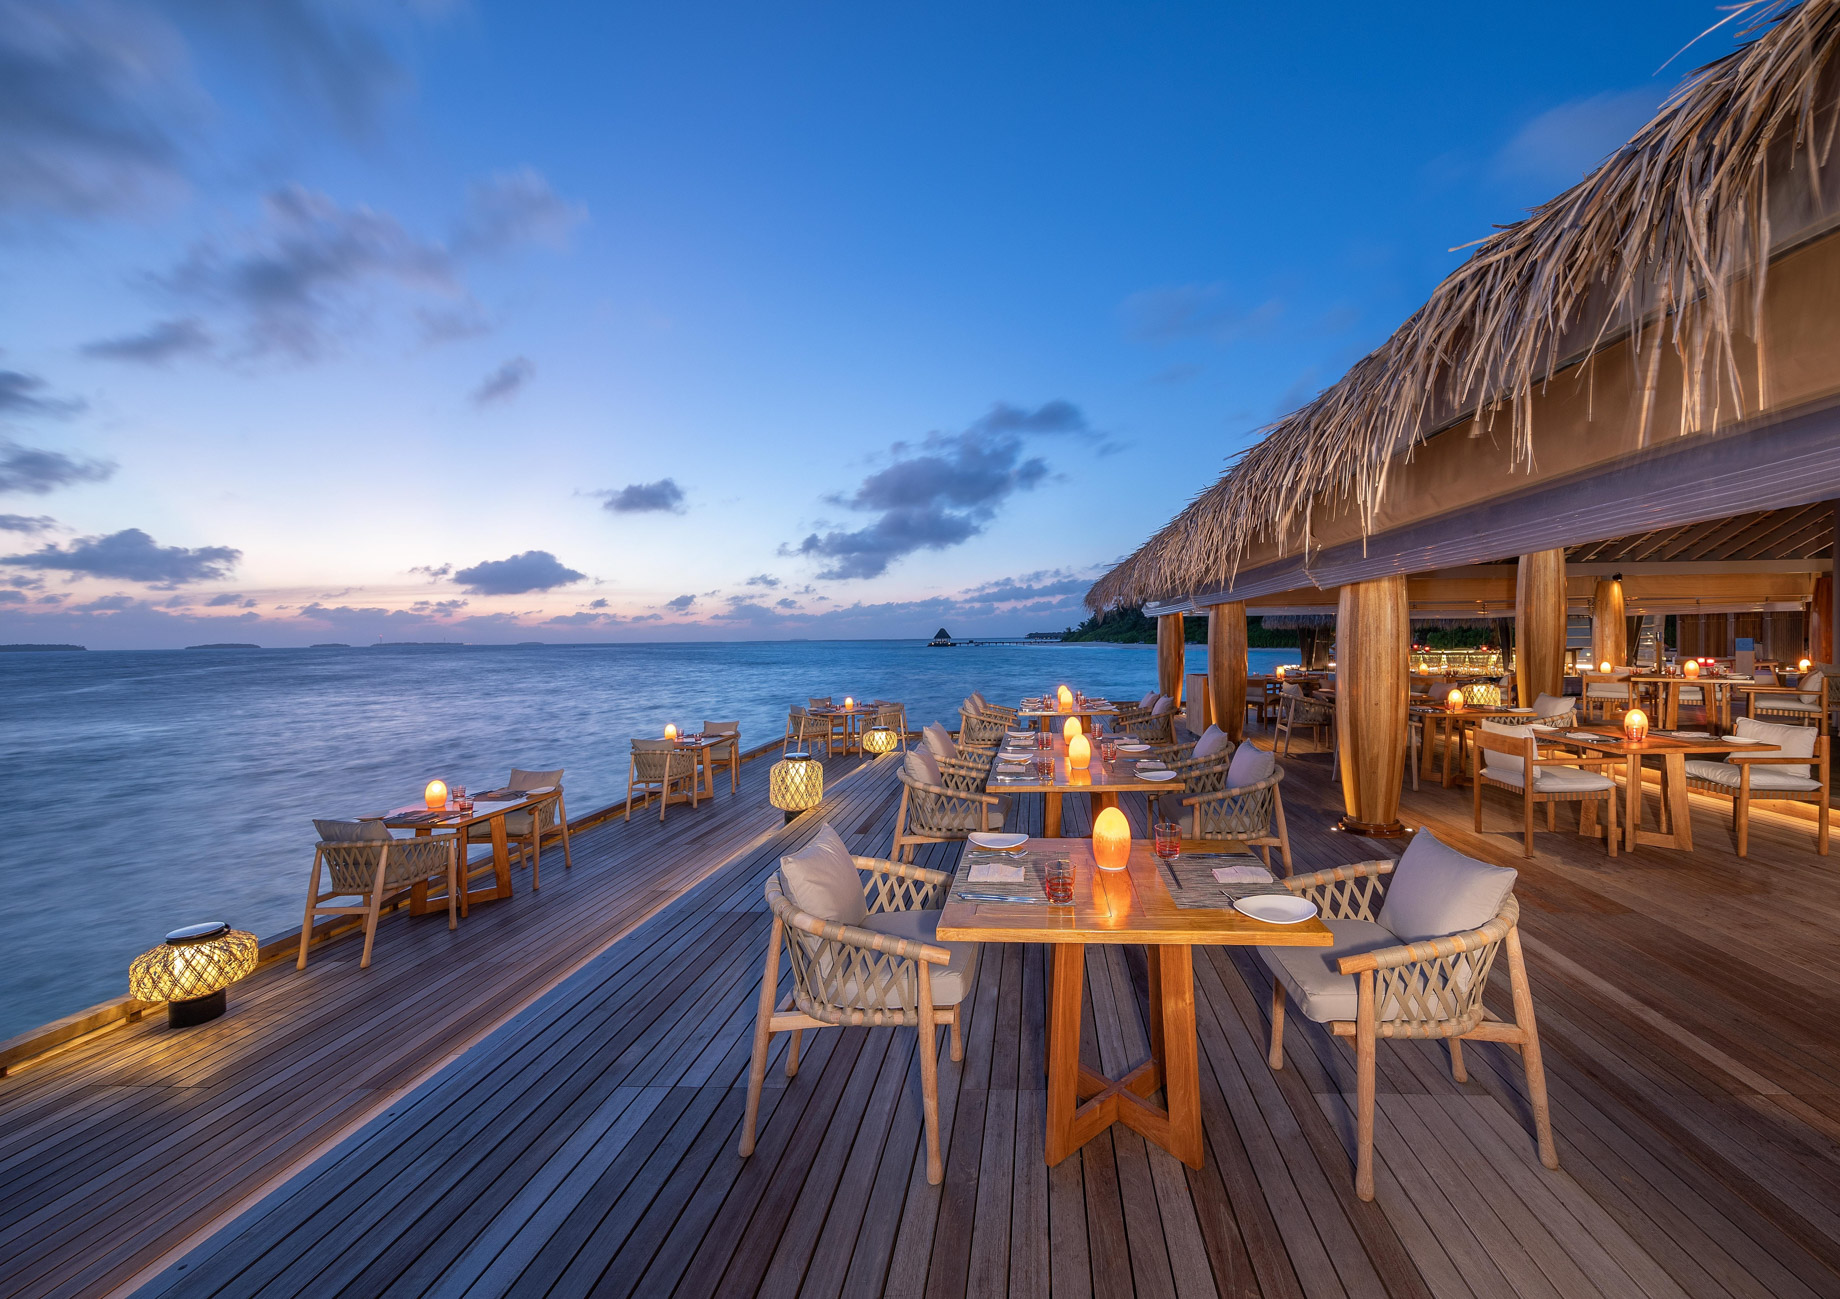 Anantara Kihavah Maldives Villas Resort – Baa Atoll, Maldives – SPICE Restaurant Deck Sunset View